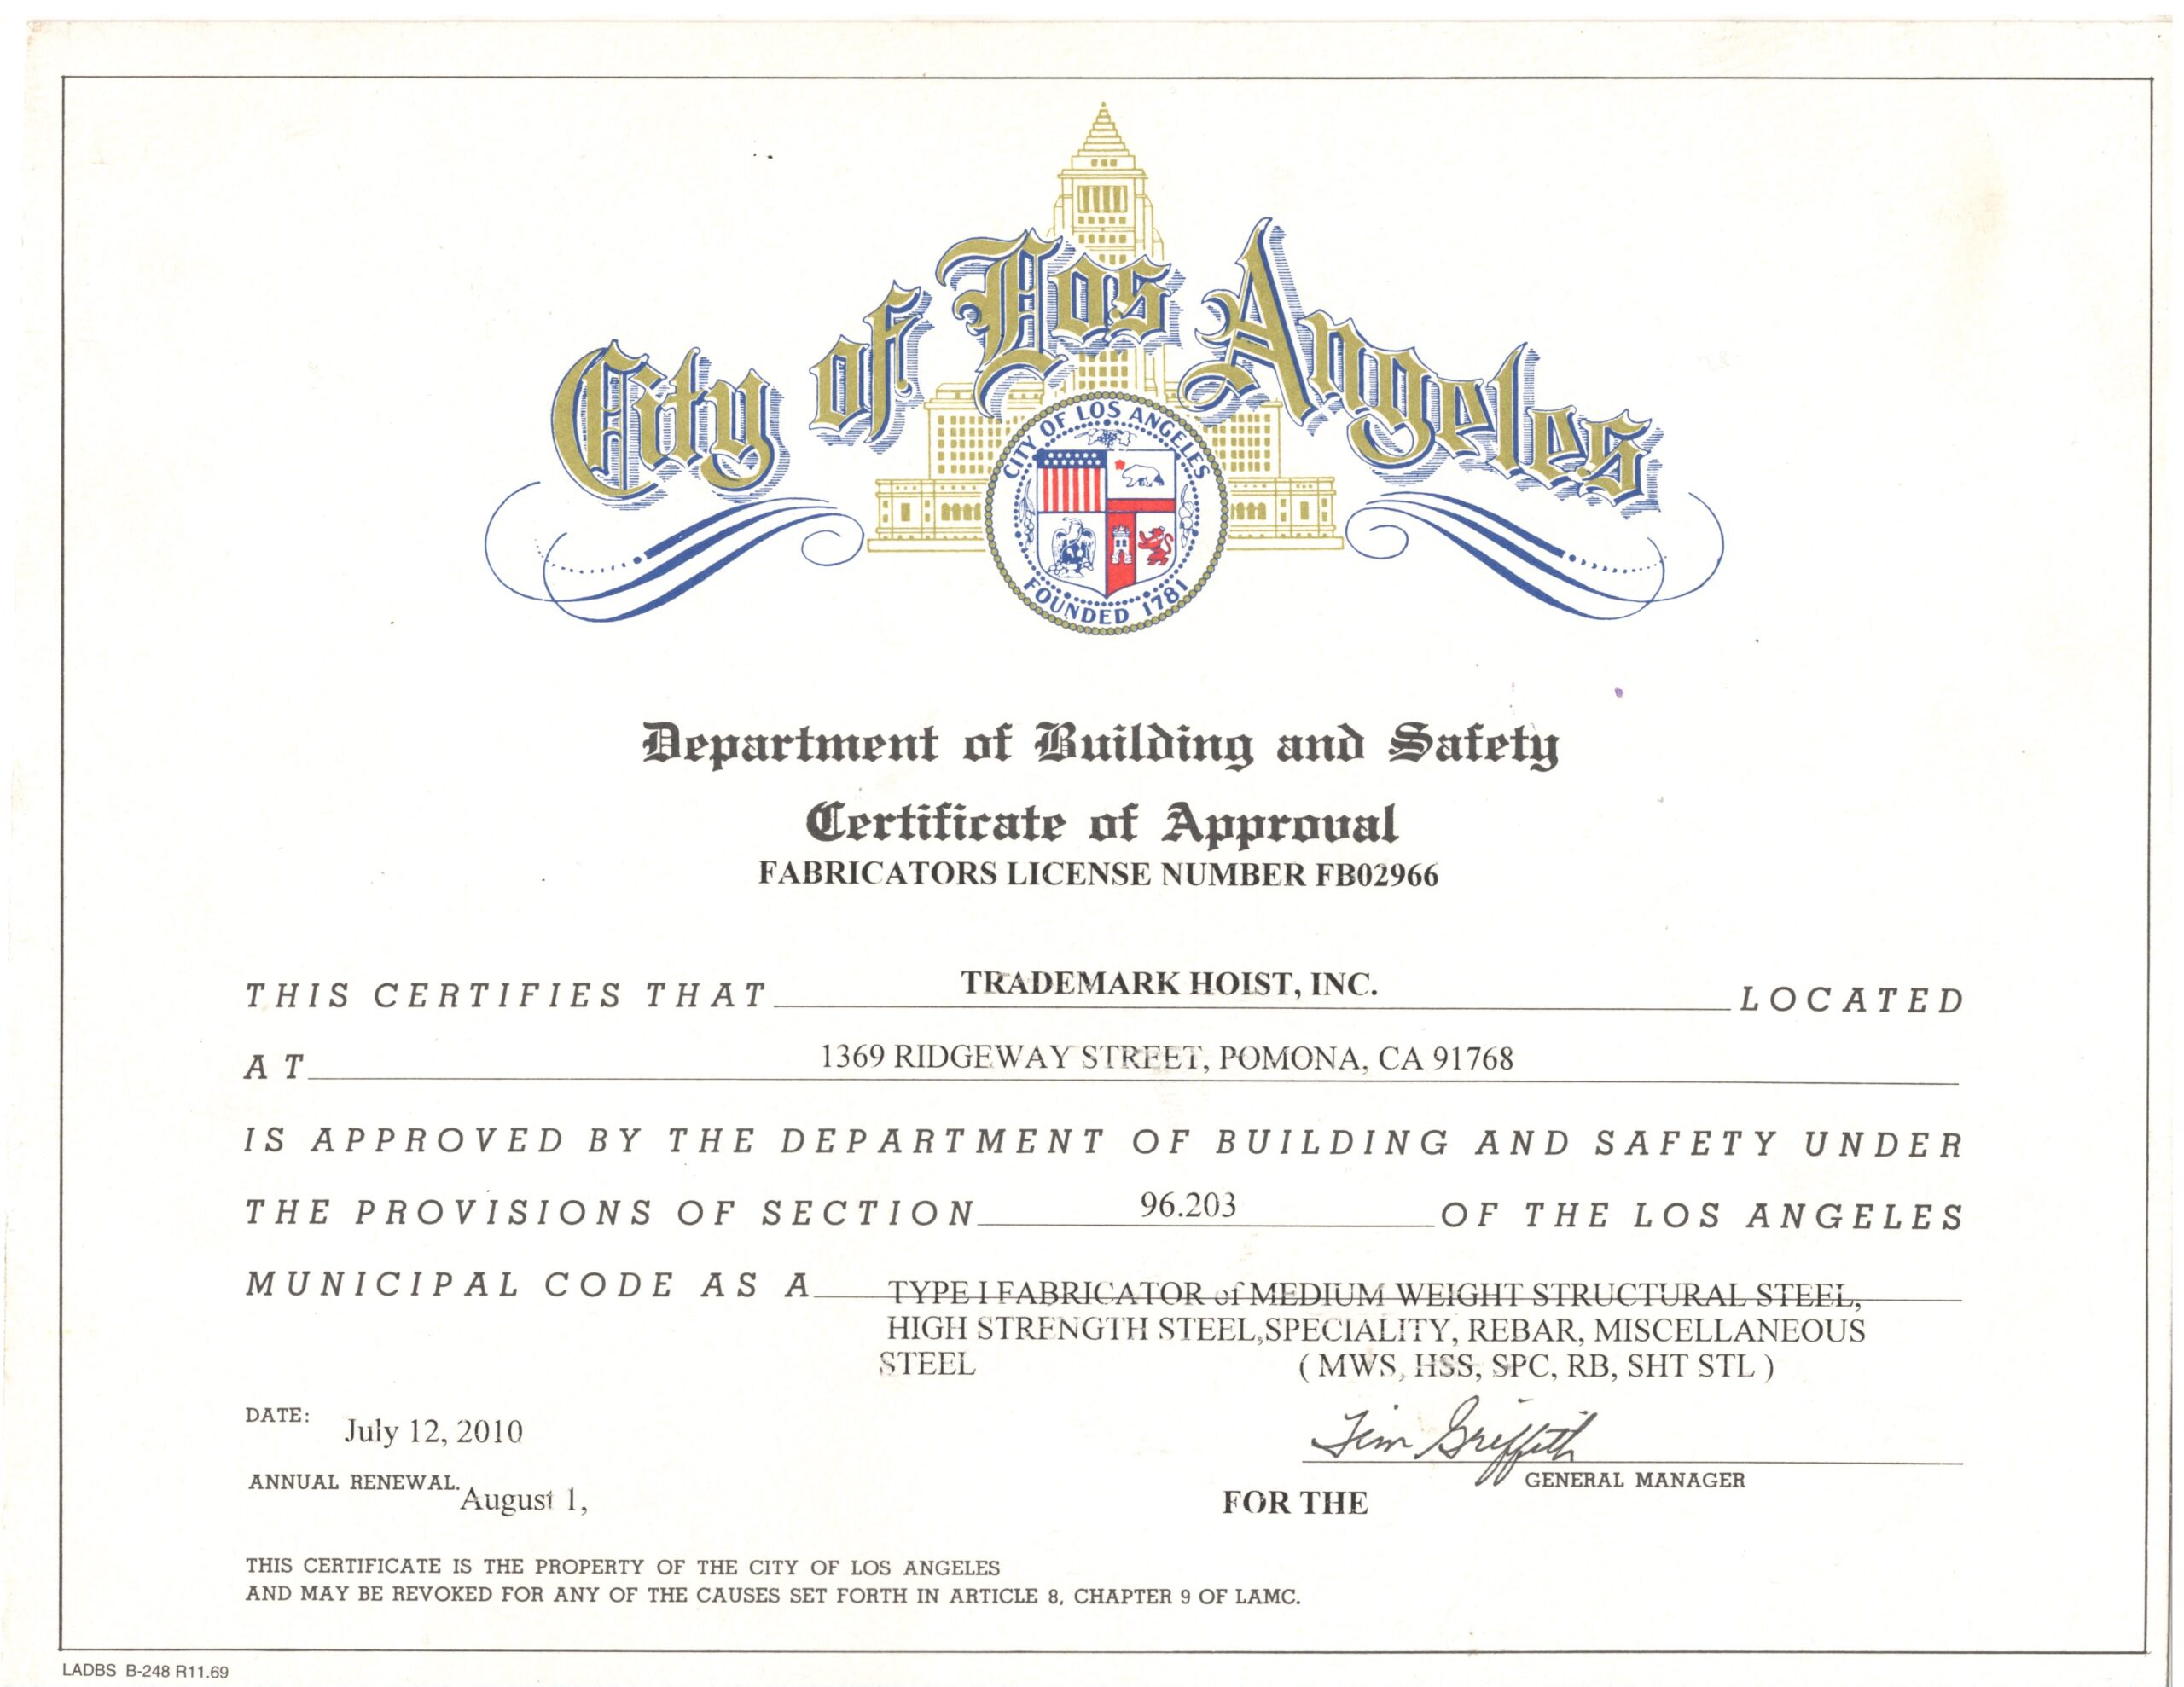 City of Los Angeles Fabricators License No. FB02966